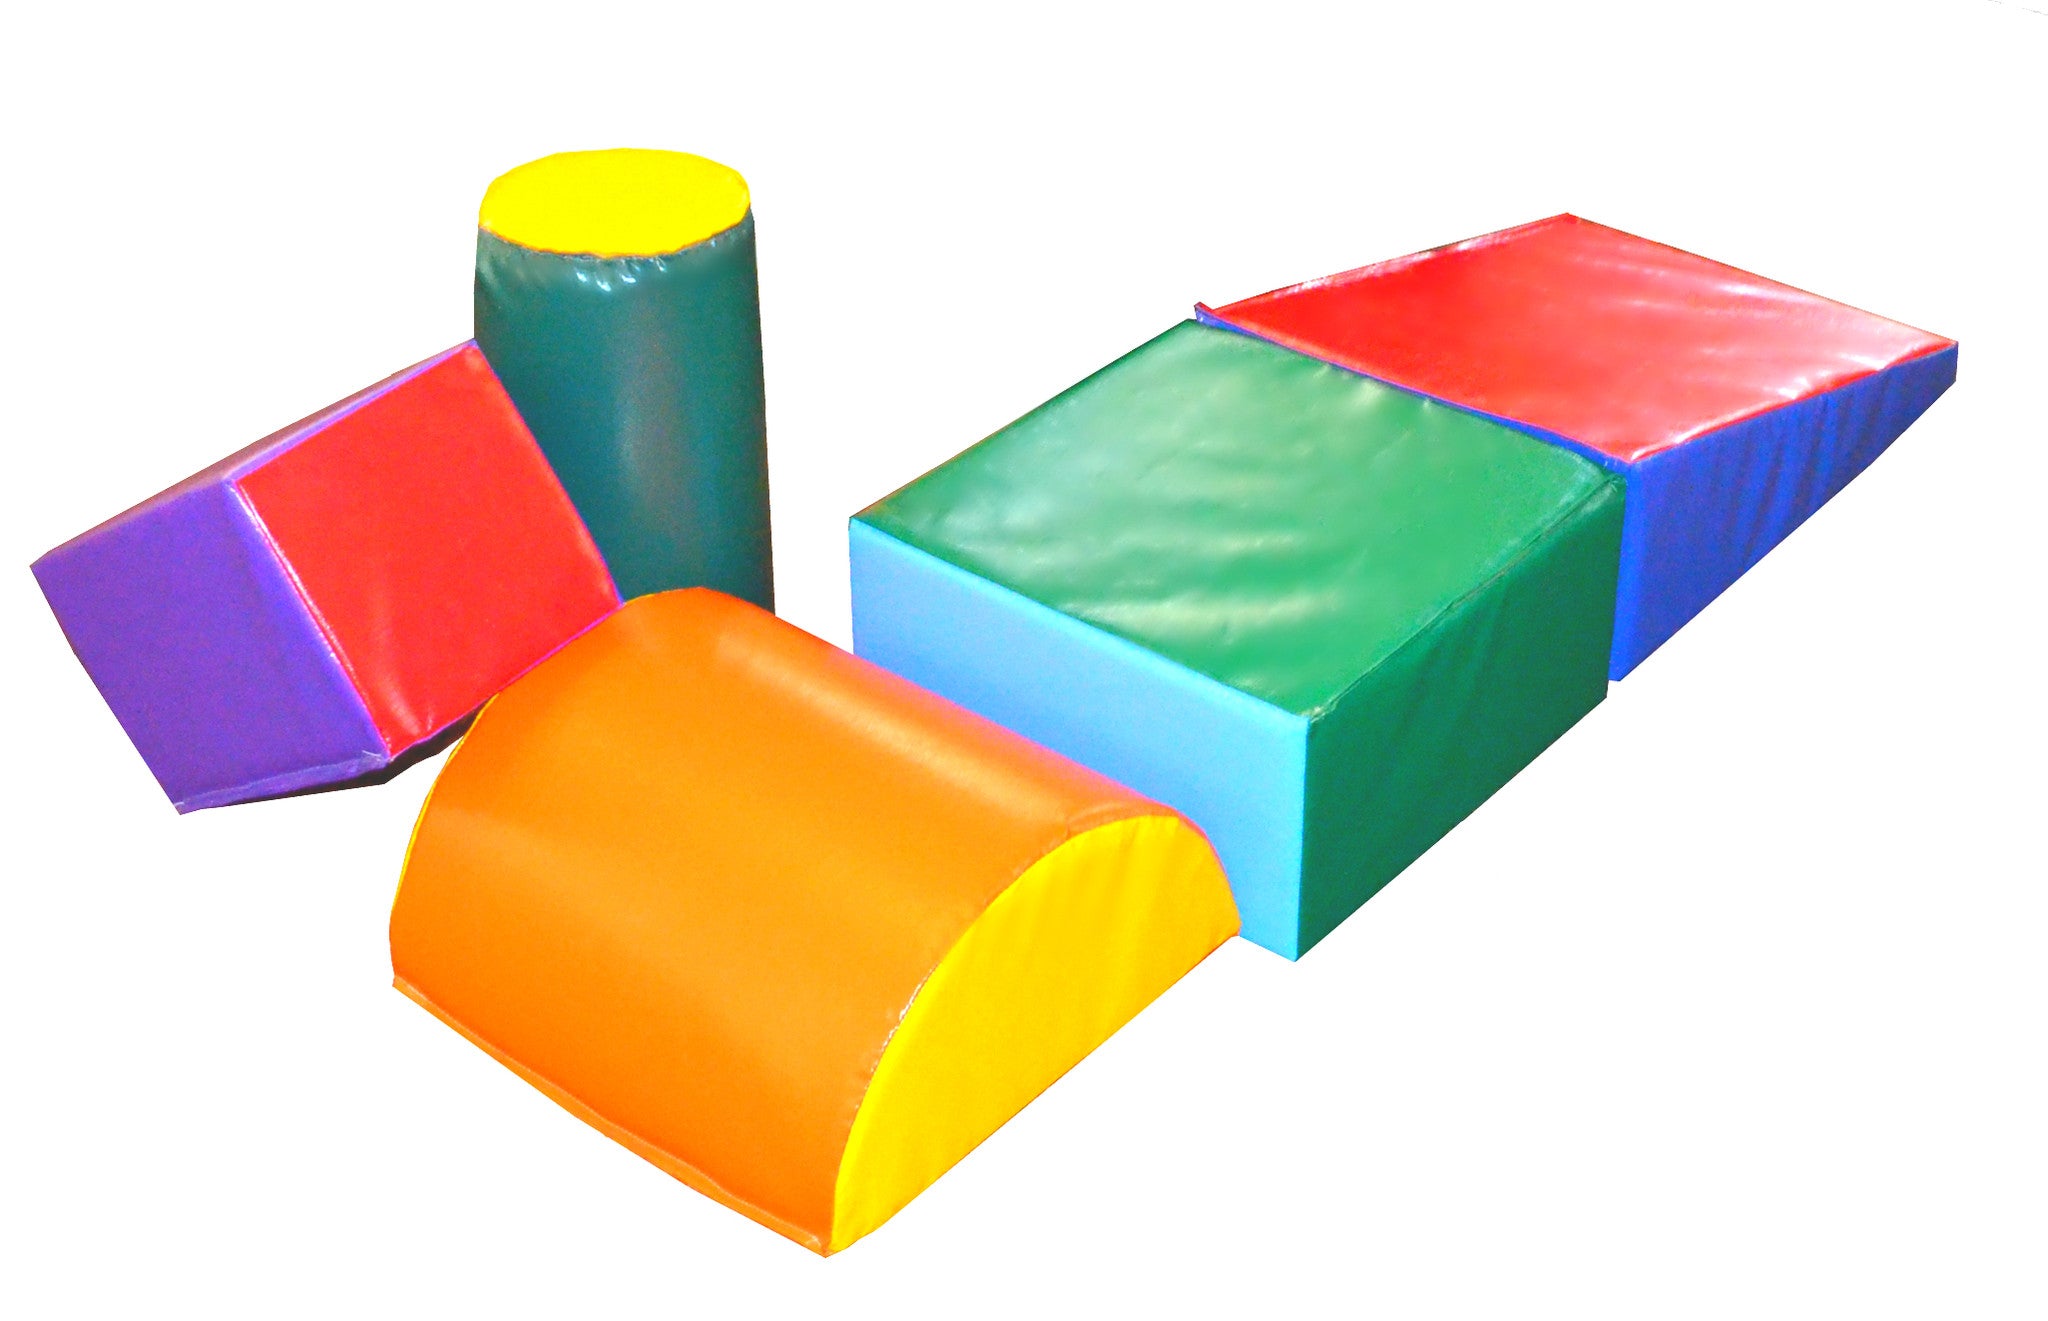 Soft Play 5-Piece Block Set